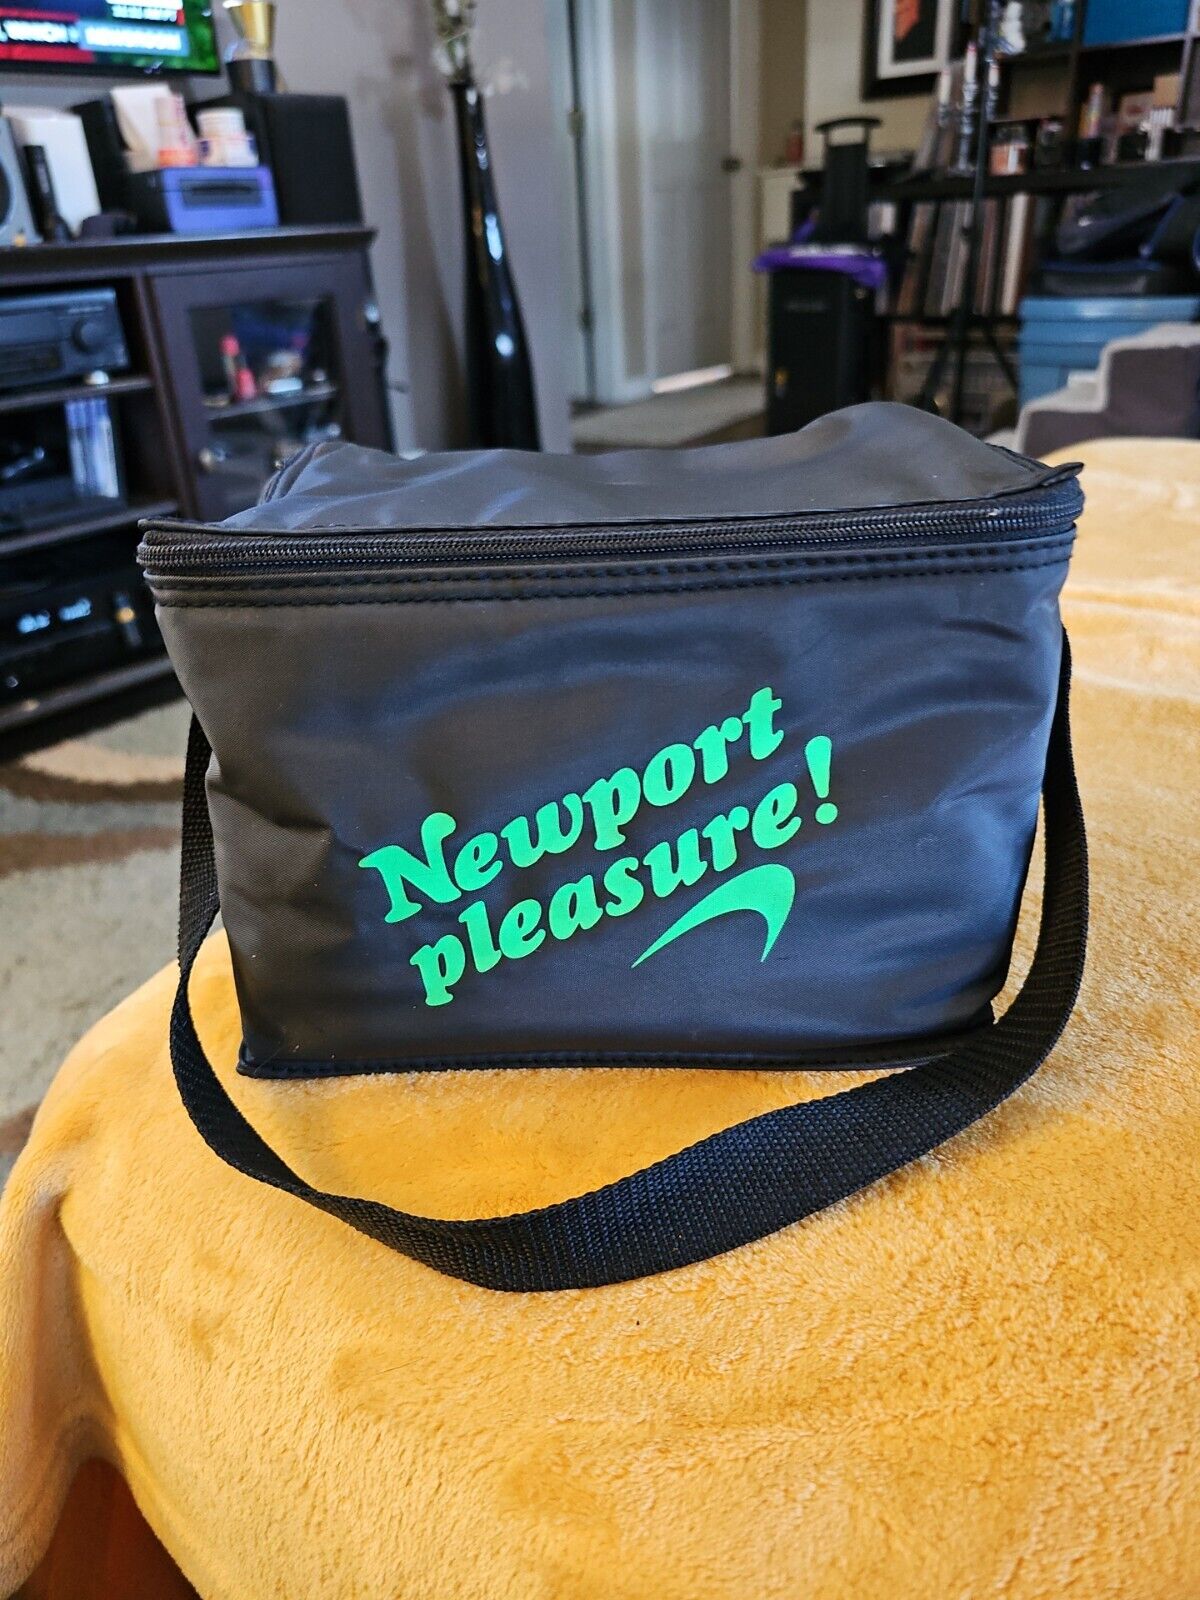 Newport Pleasure Lunch Bag Cooler Promo Black Green Logo Zipper Closure Vintage